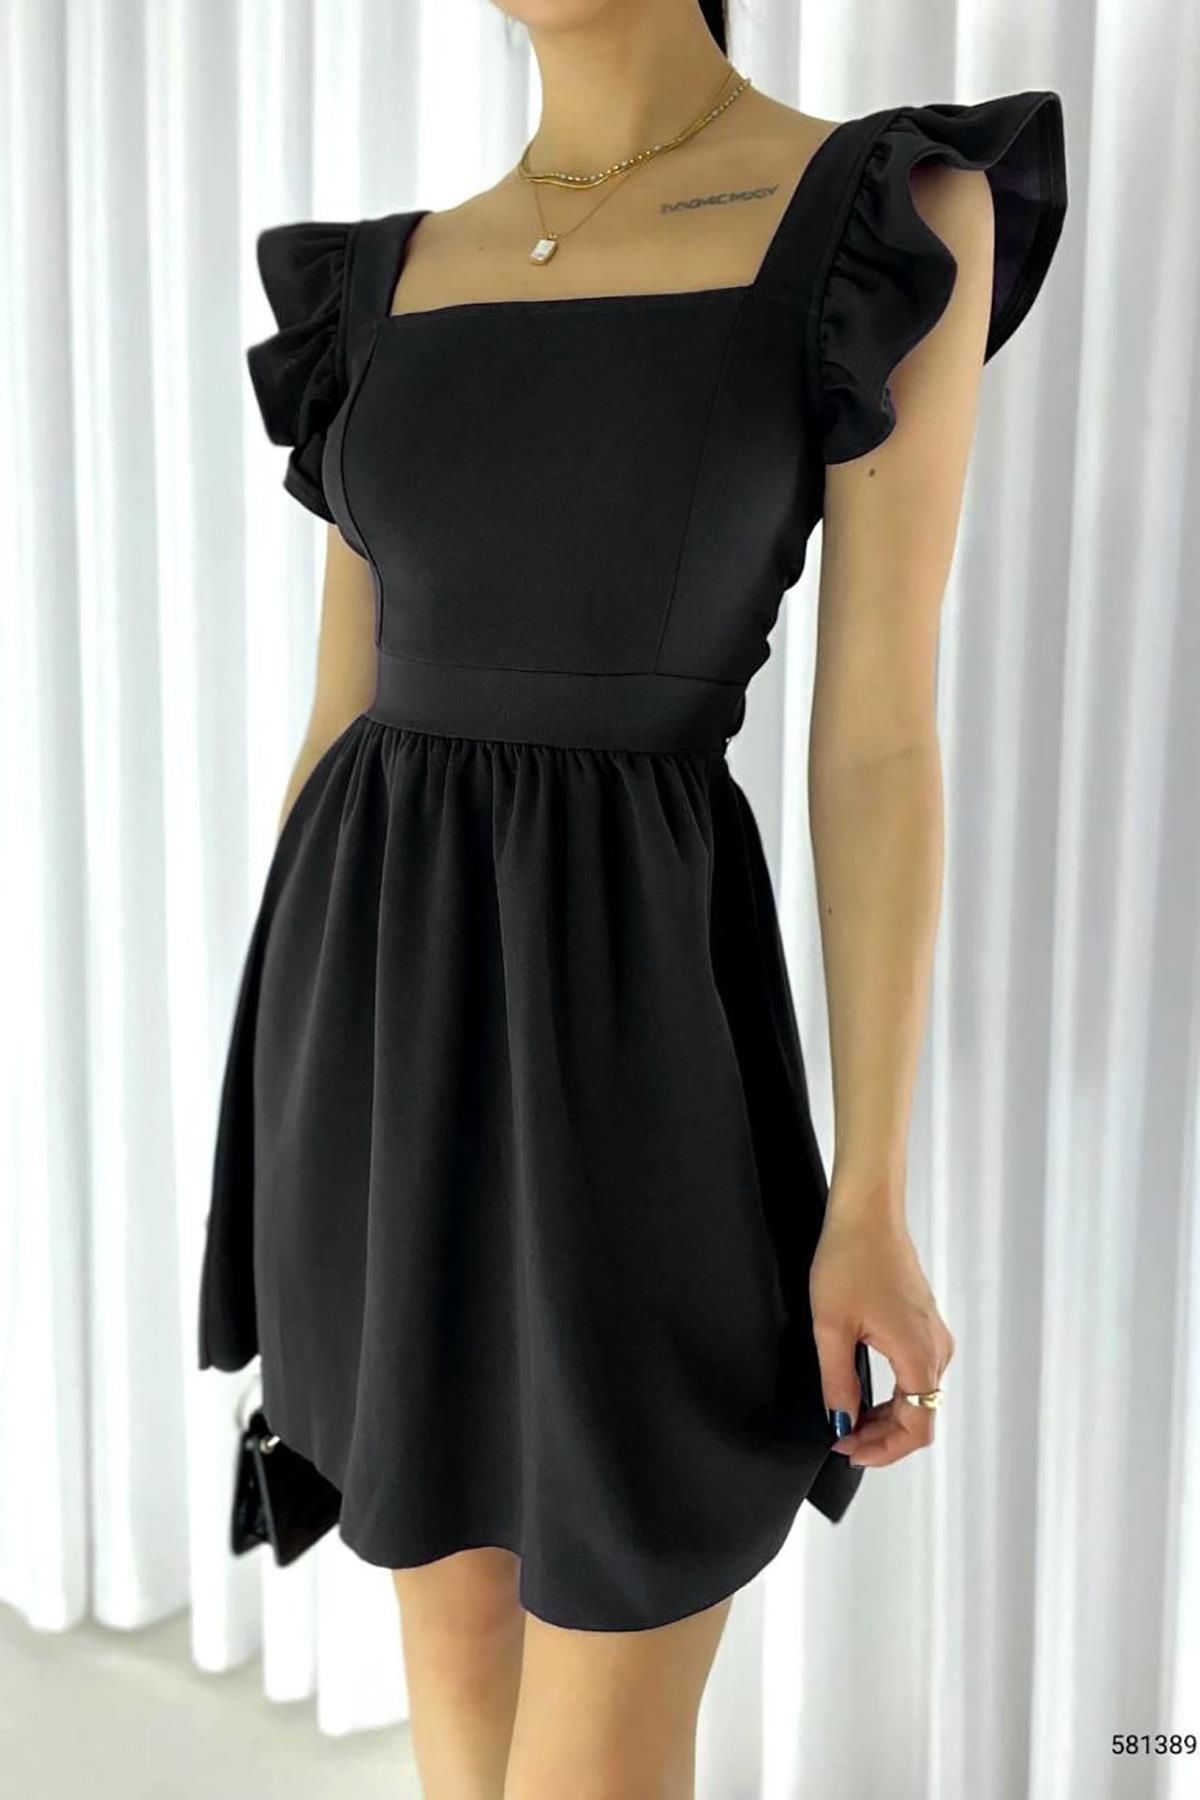 Deafox Siyah Omuz Volanlı Sırt Bağlama Detay Ithal Krep Kumaş Elbise